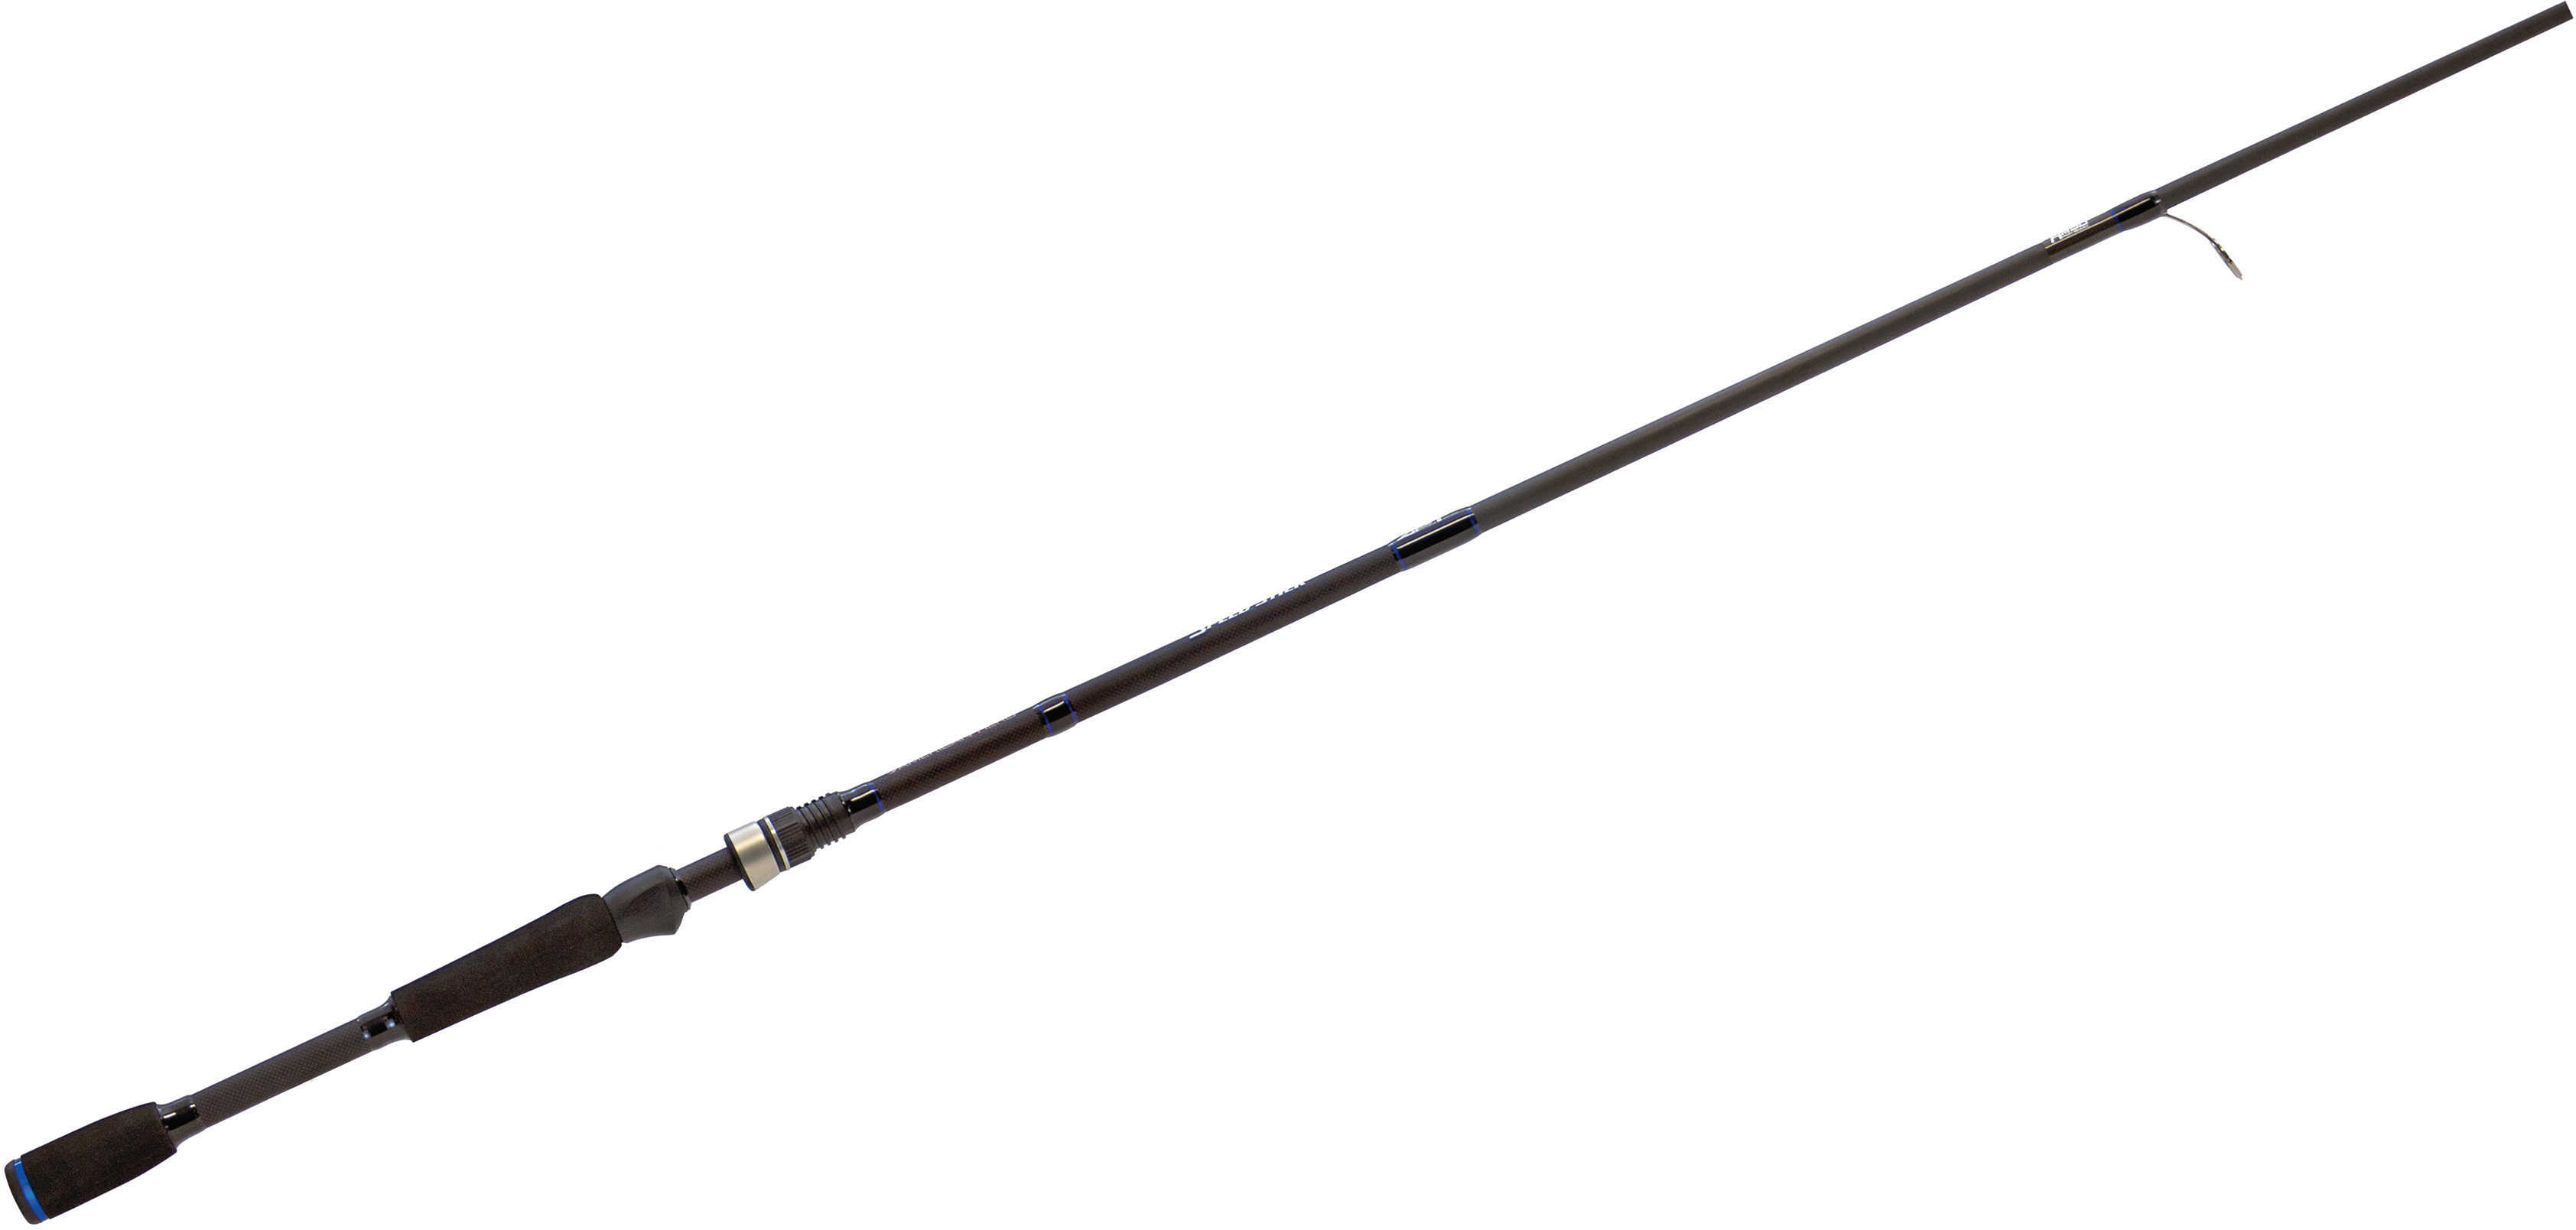 Lew's American Hero Speed Stick Rod Spinning, Medium, 7' Md: AH70MS